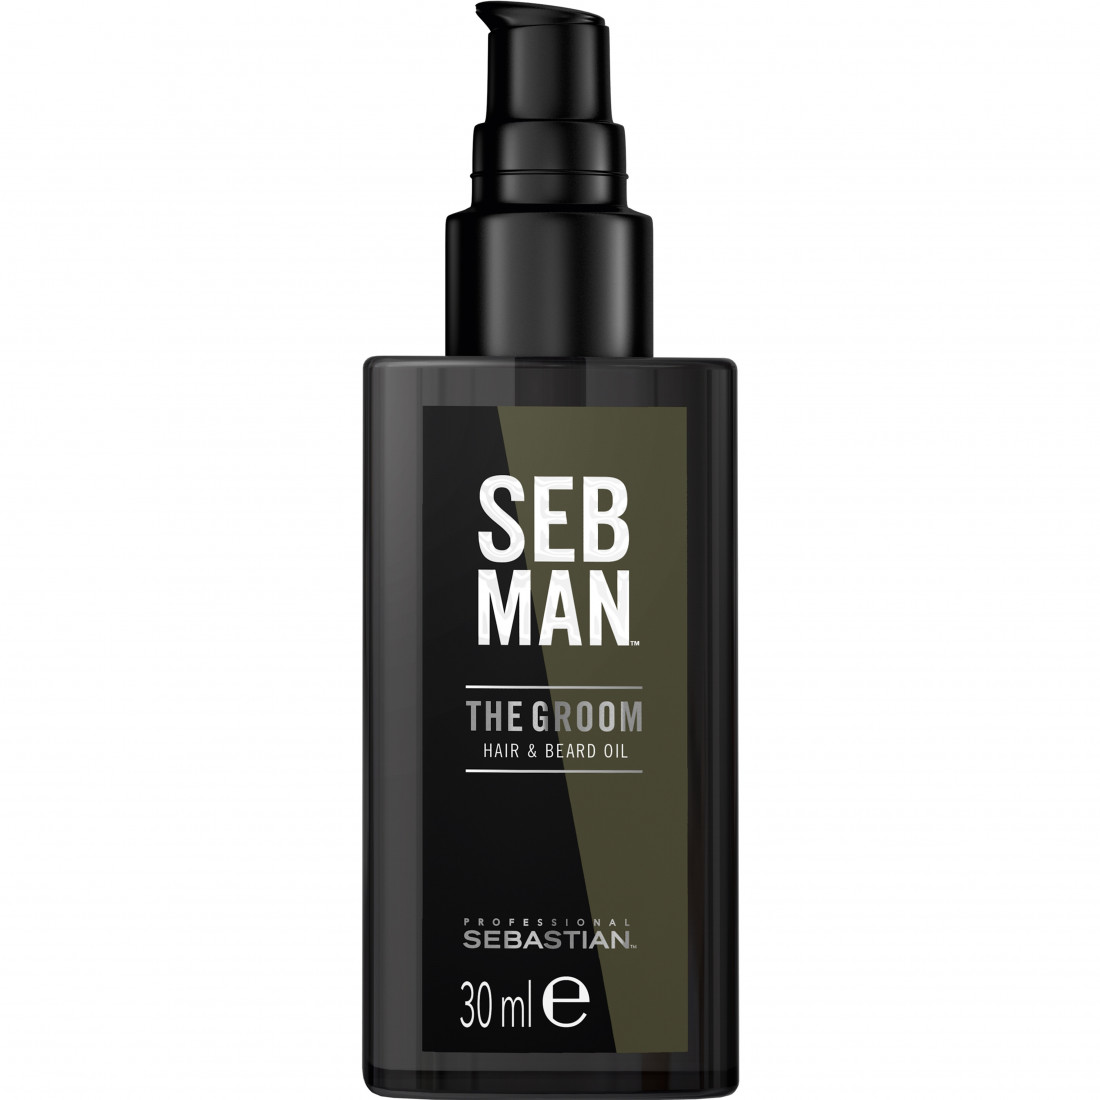 SEBMAN THE GROOM Haar- und Bartpflegeöl 30 ml